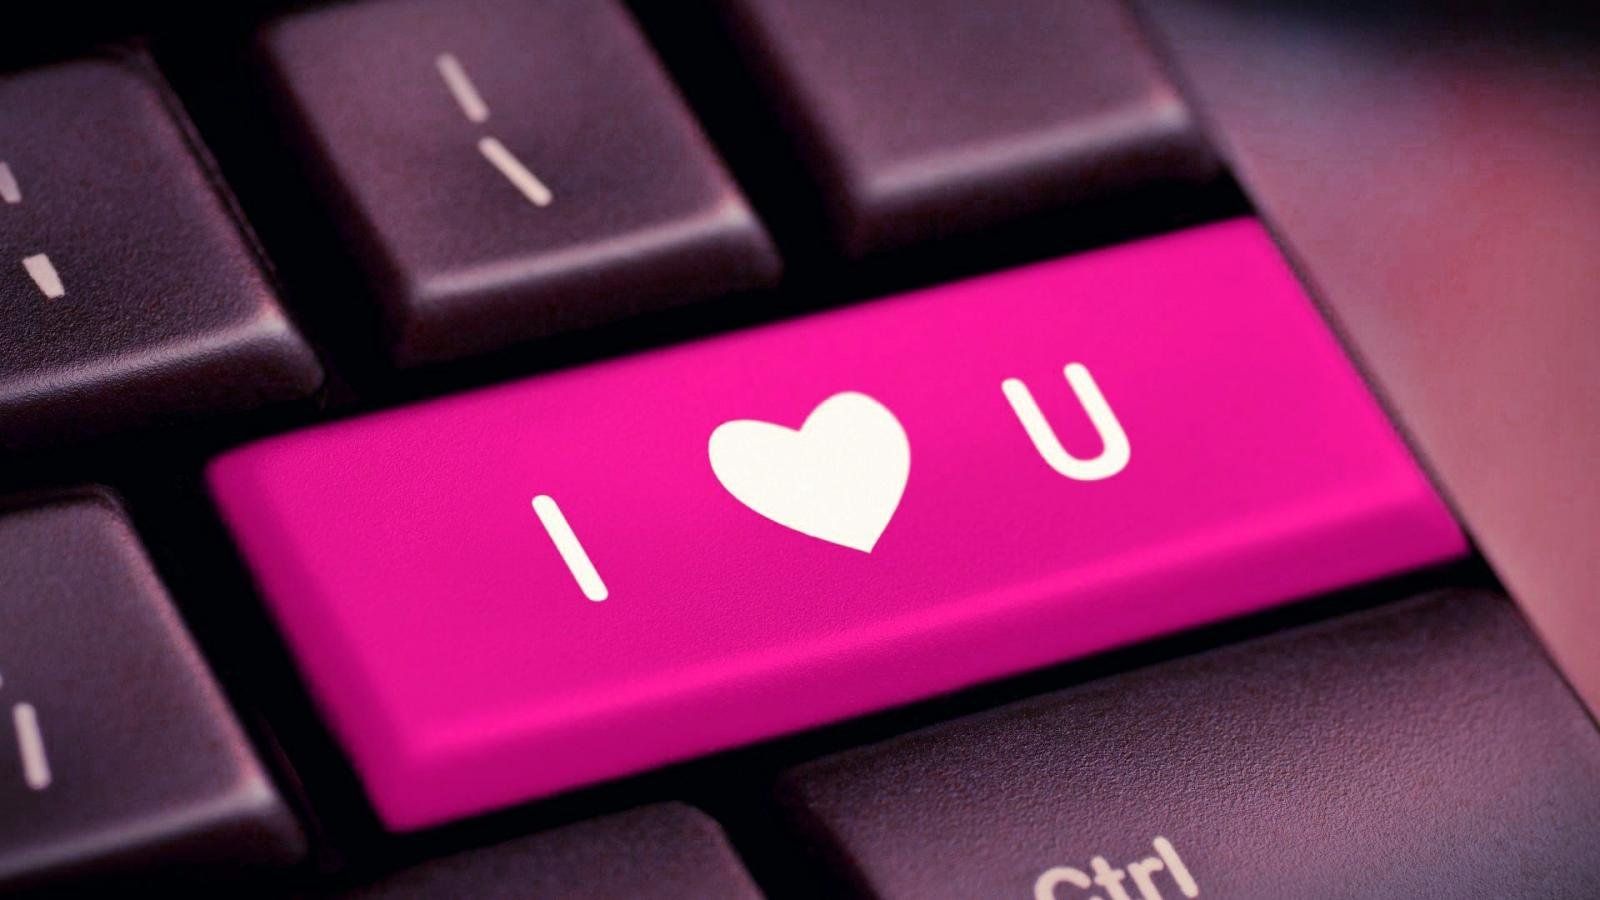 I love you pink computer keyboard wallpaper | 1600x900 | 655387 ...